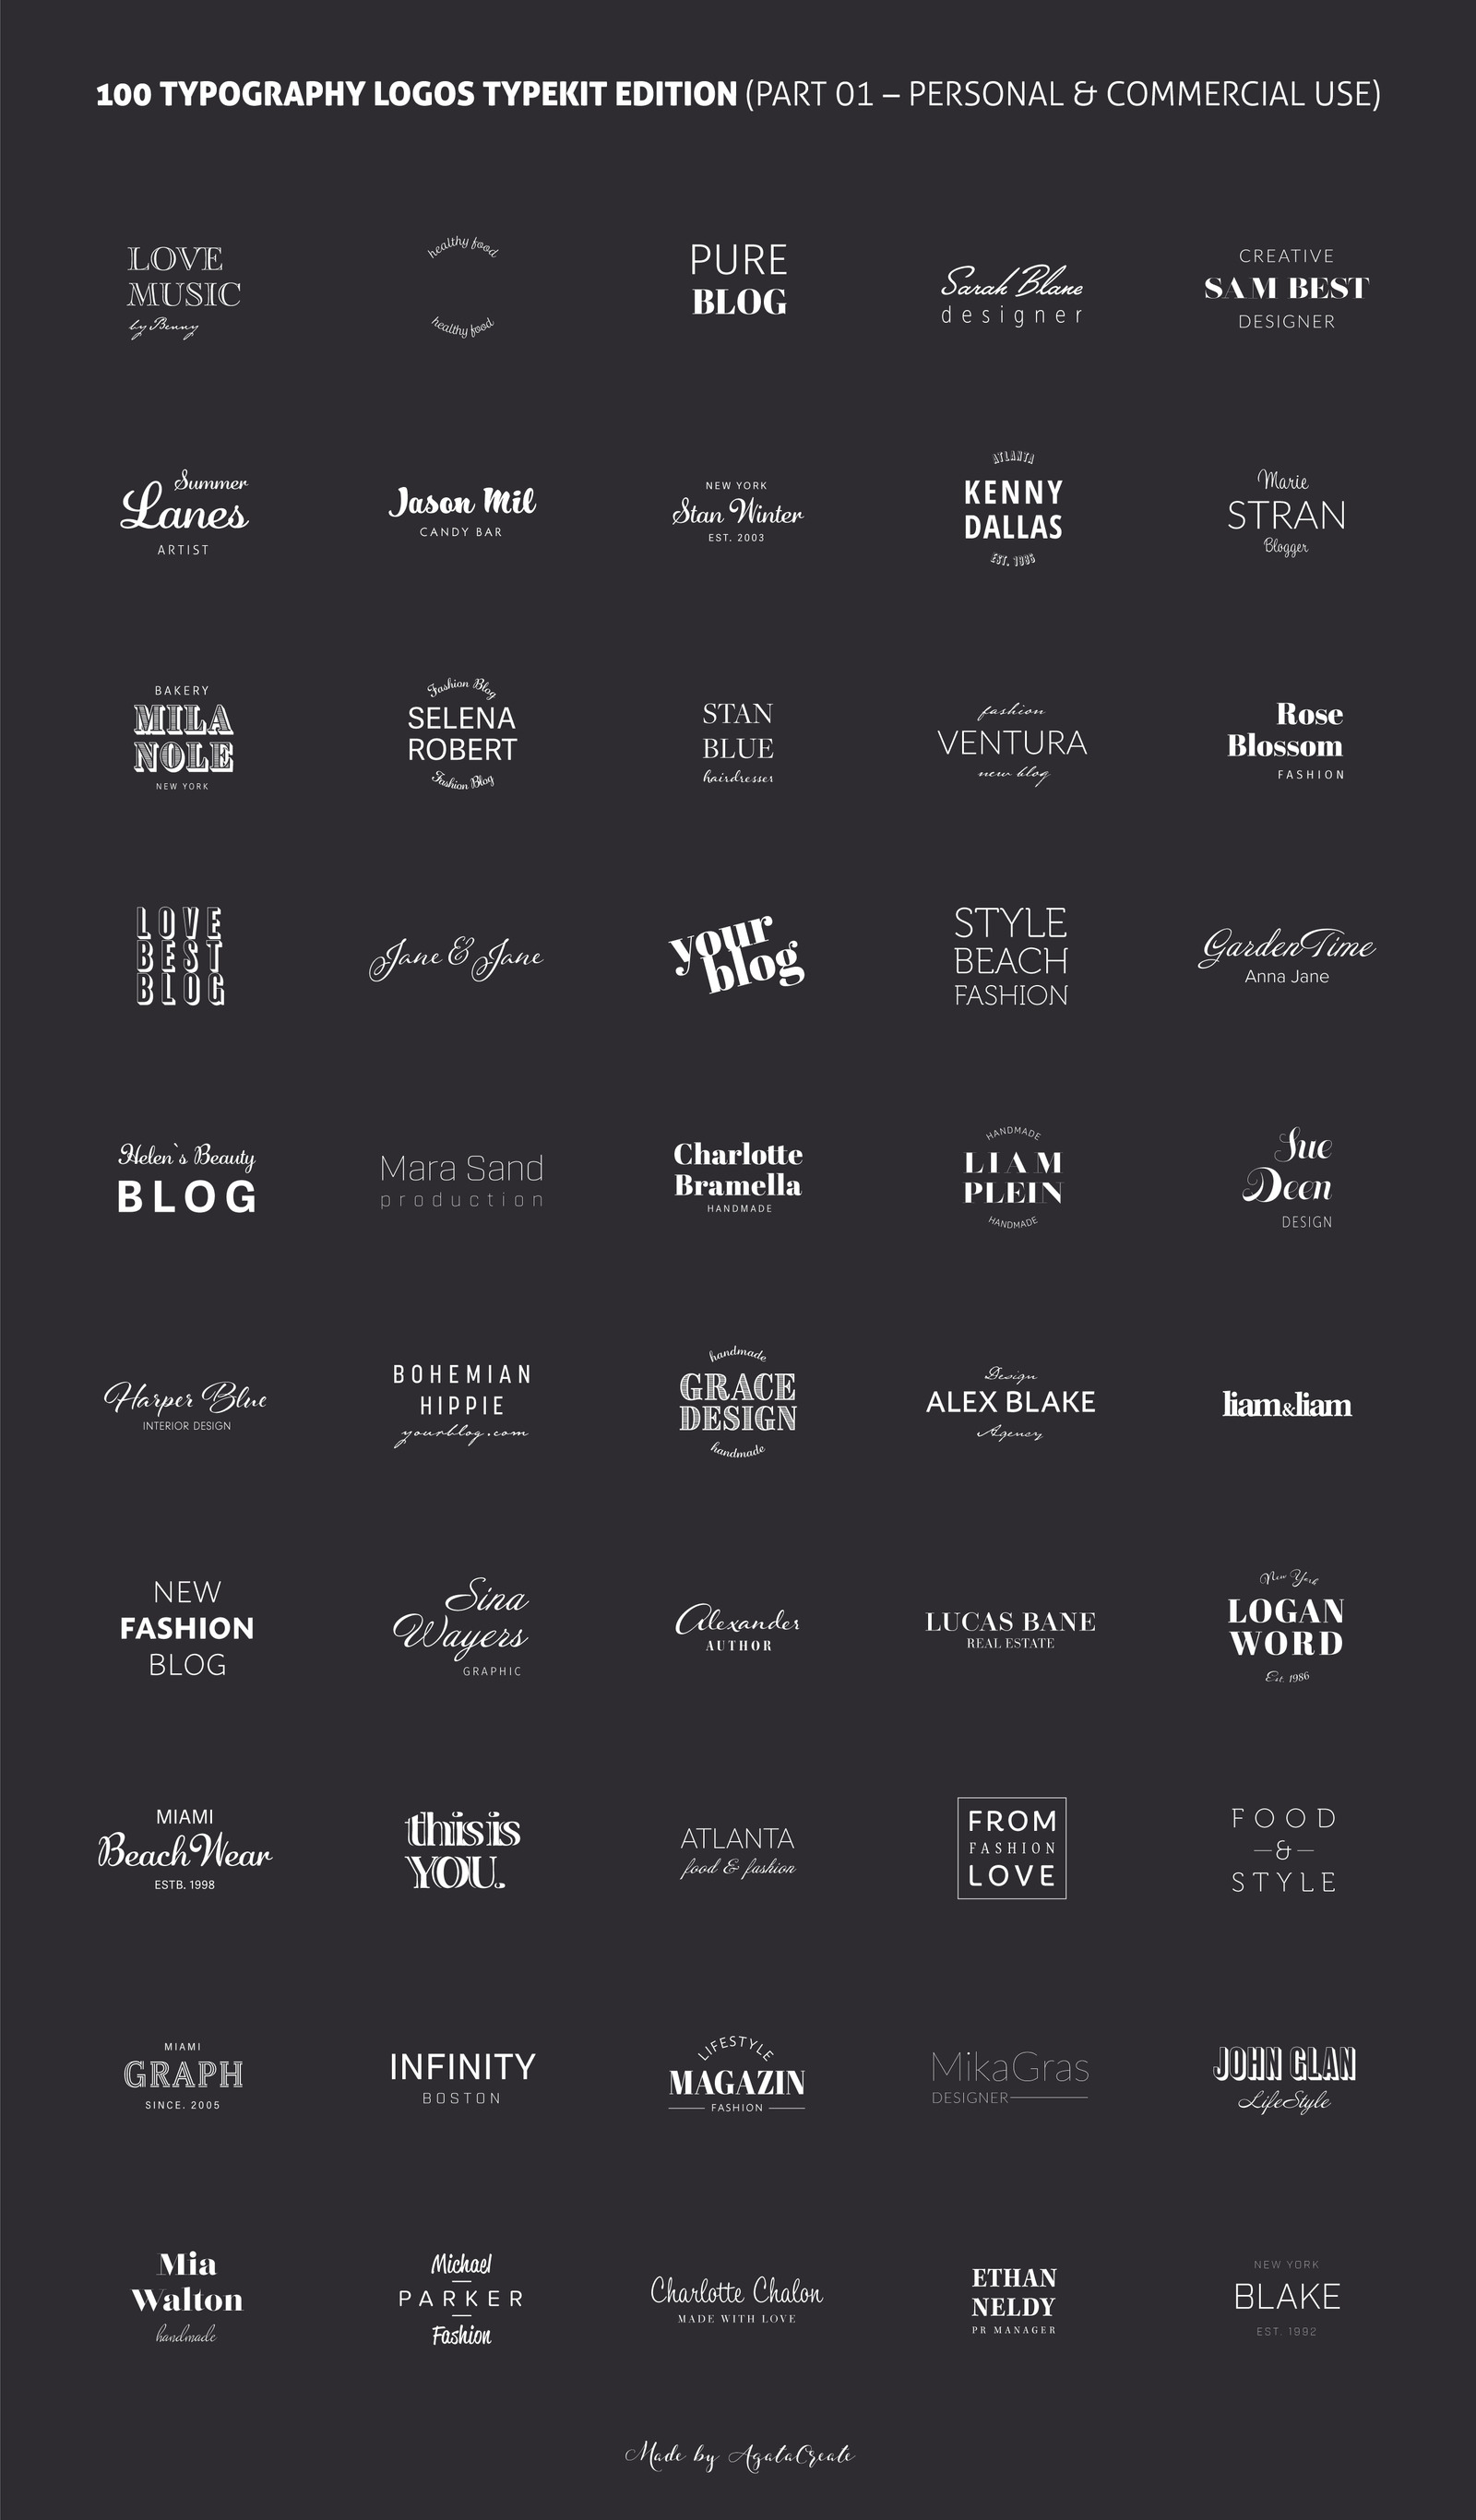 200 Typography Logos Logo Template #76677 - TemplateMonster